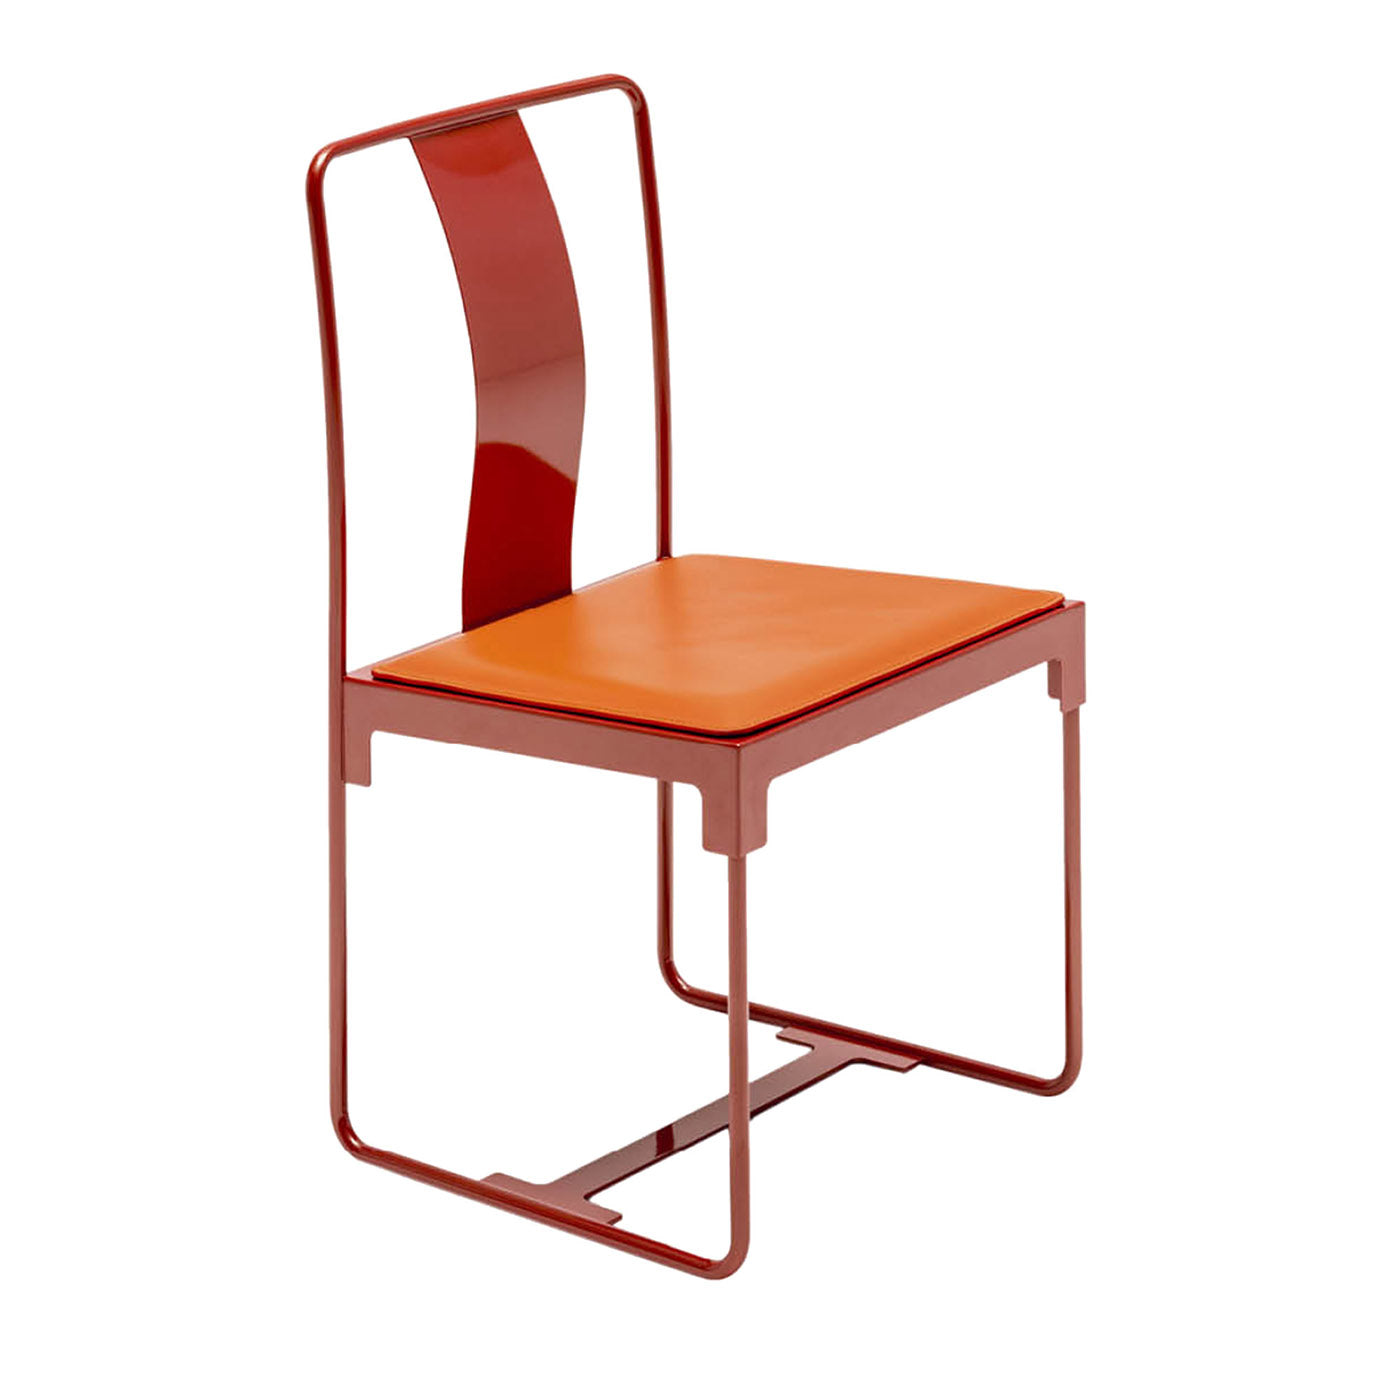 Mingx Orange Chair by Konstantin Grcic - Main view